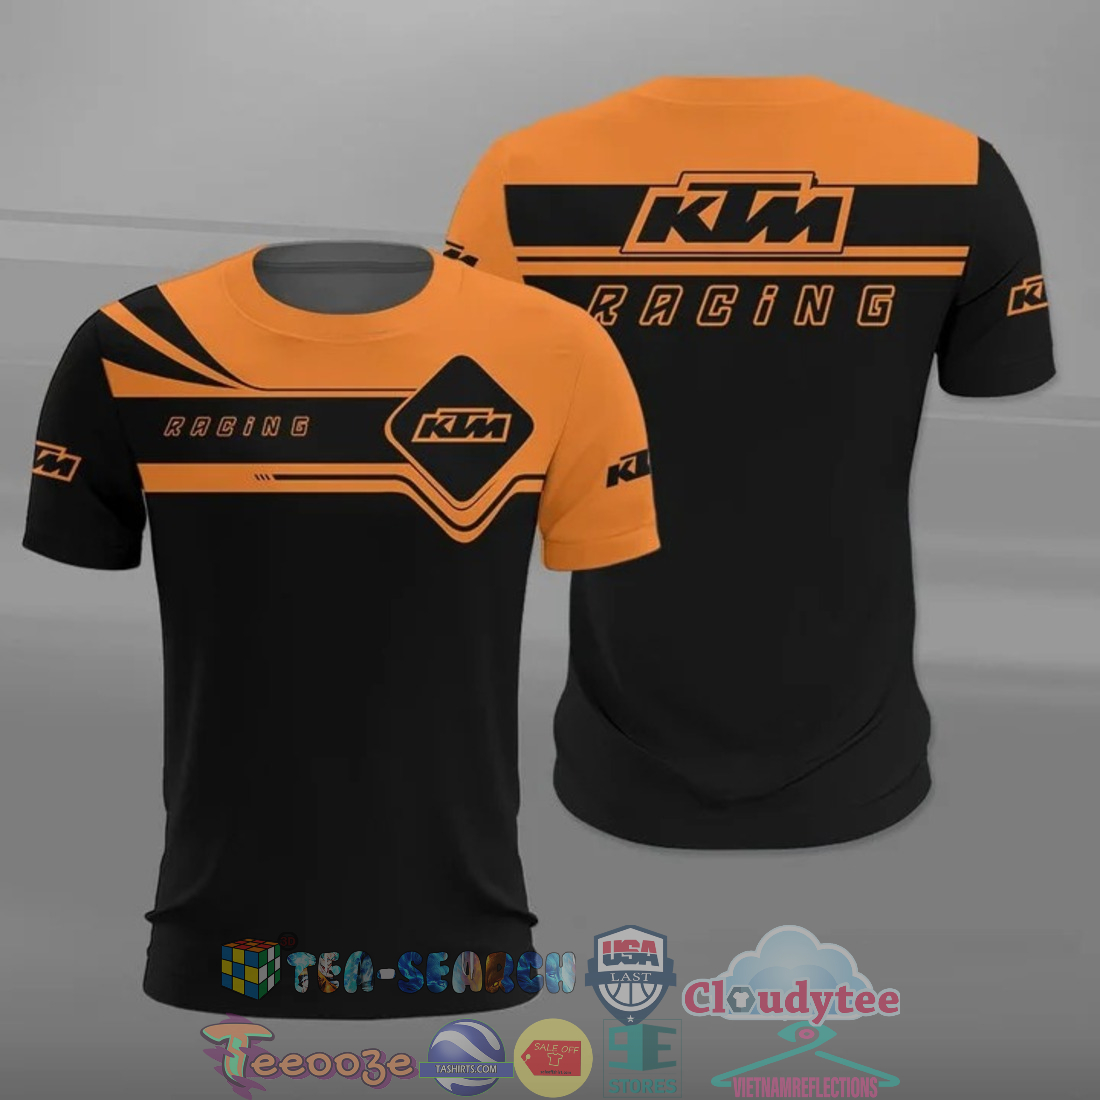 KTM Racing all over printed t-shirt hoodie